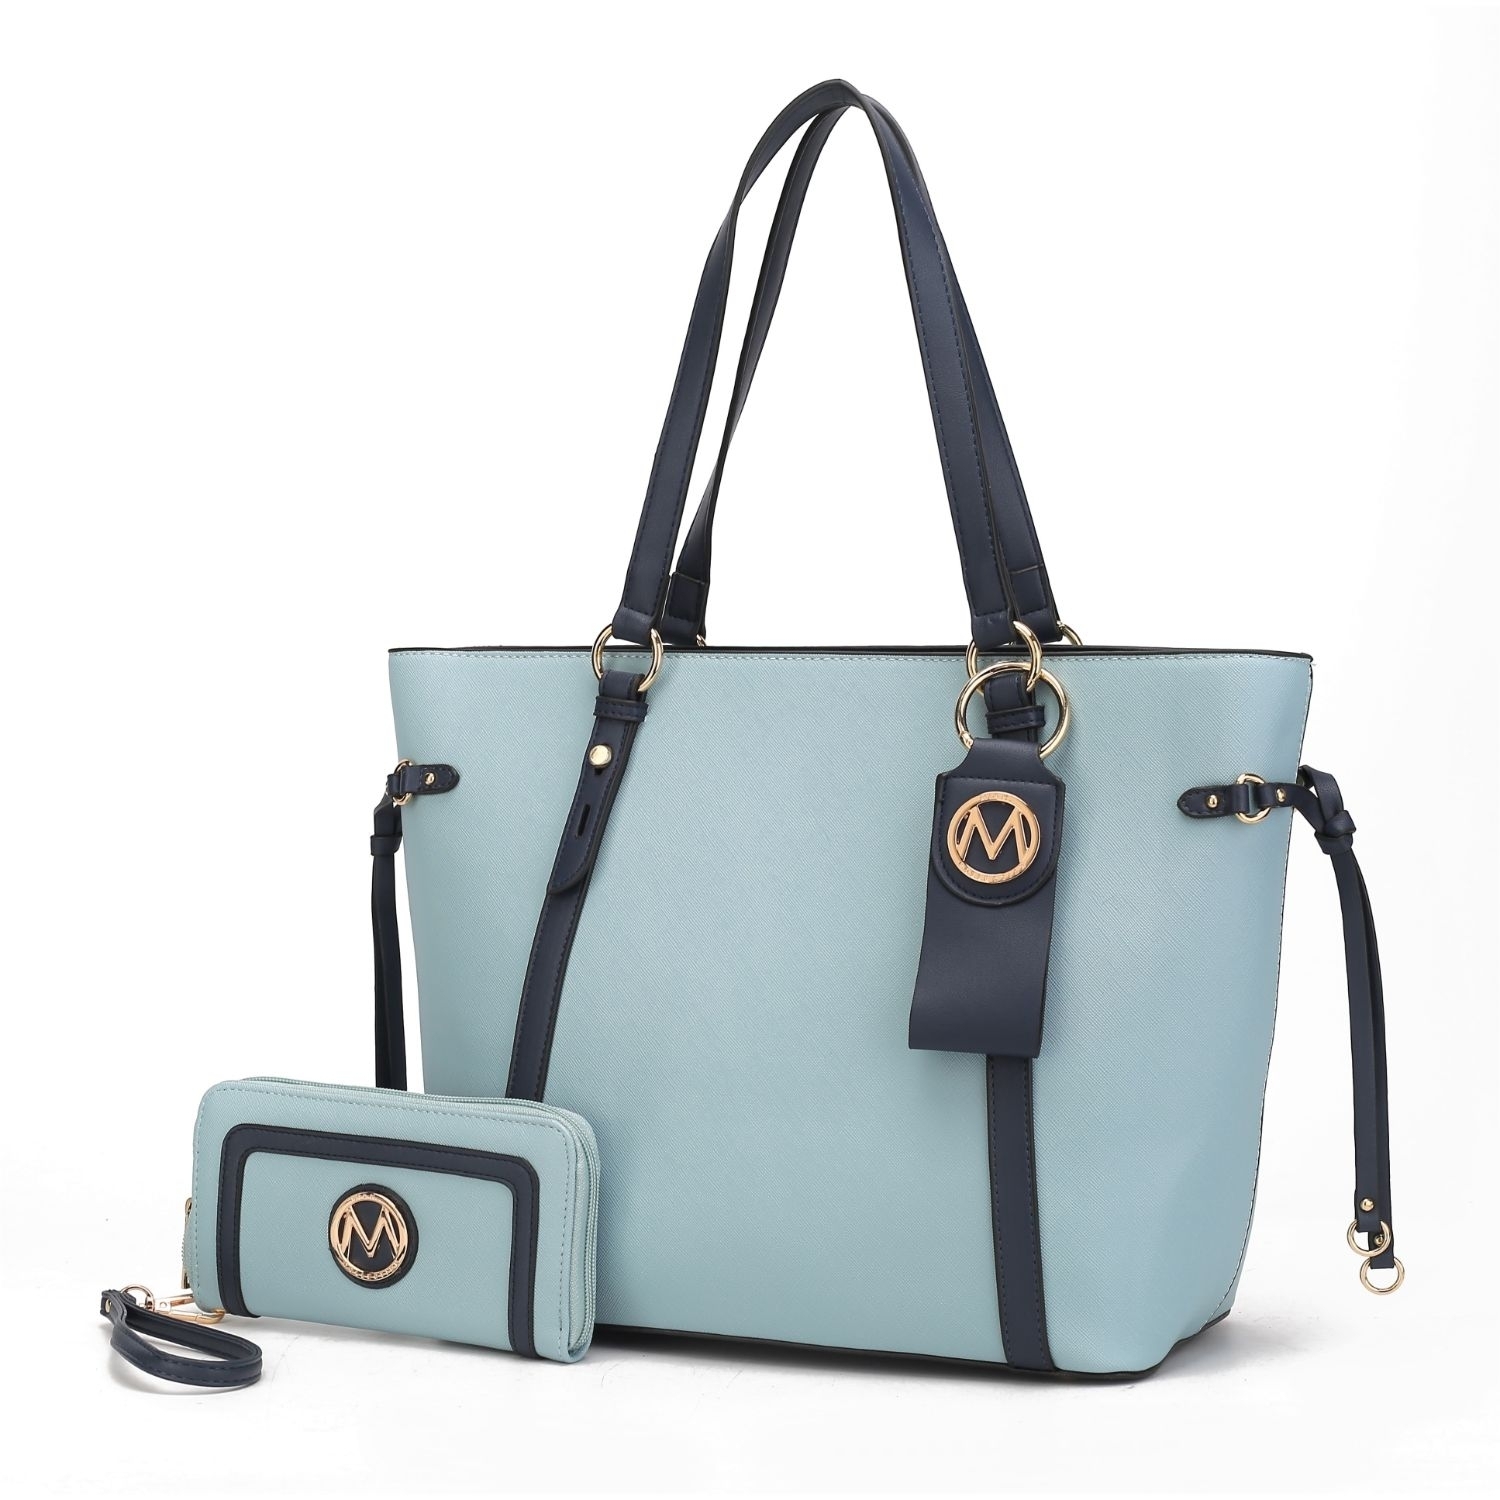 MKF Collection Koeia 3 Pcs Set Tote Handbag, Wallet And Keyring By Mia K. - Light Blue Navy